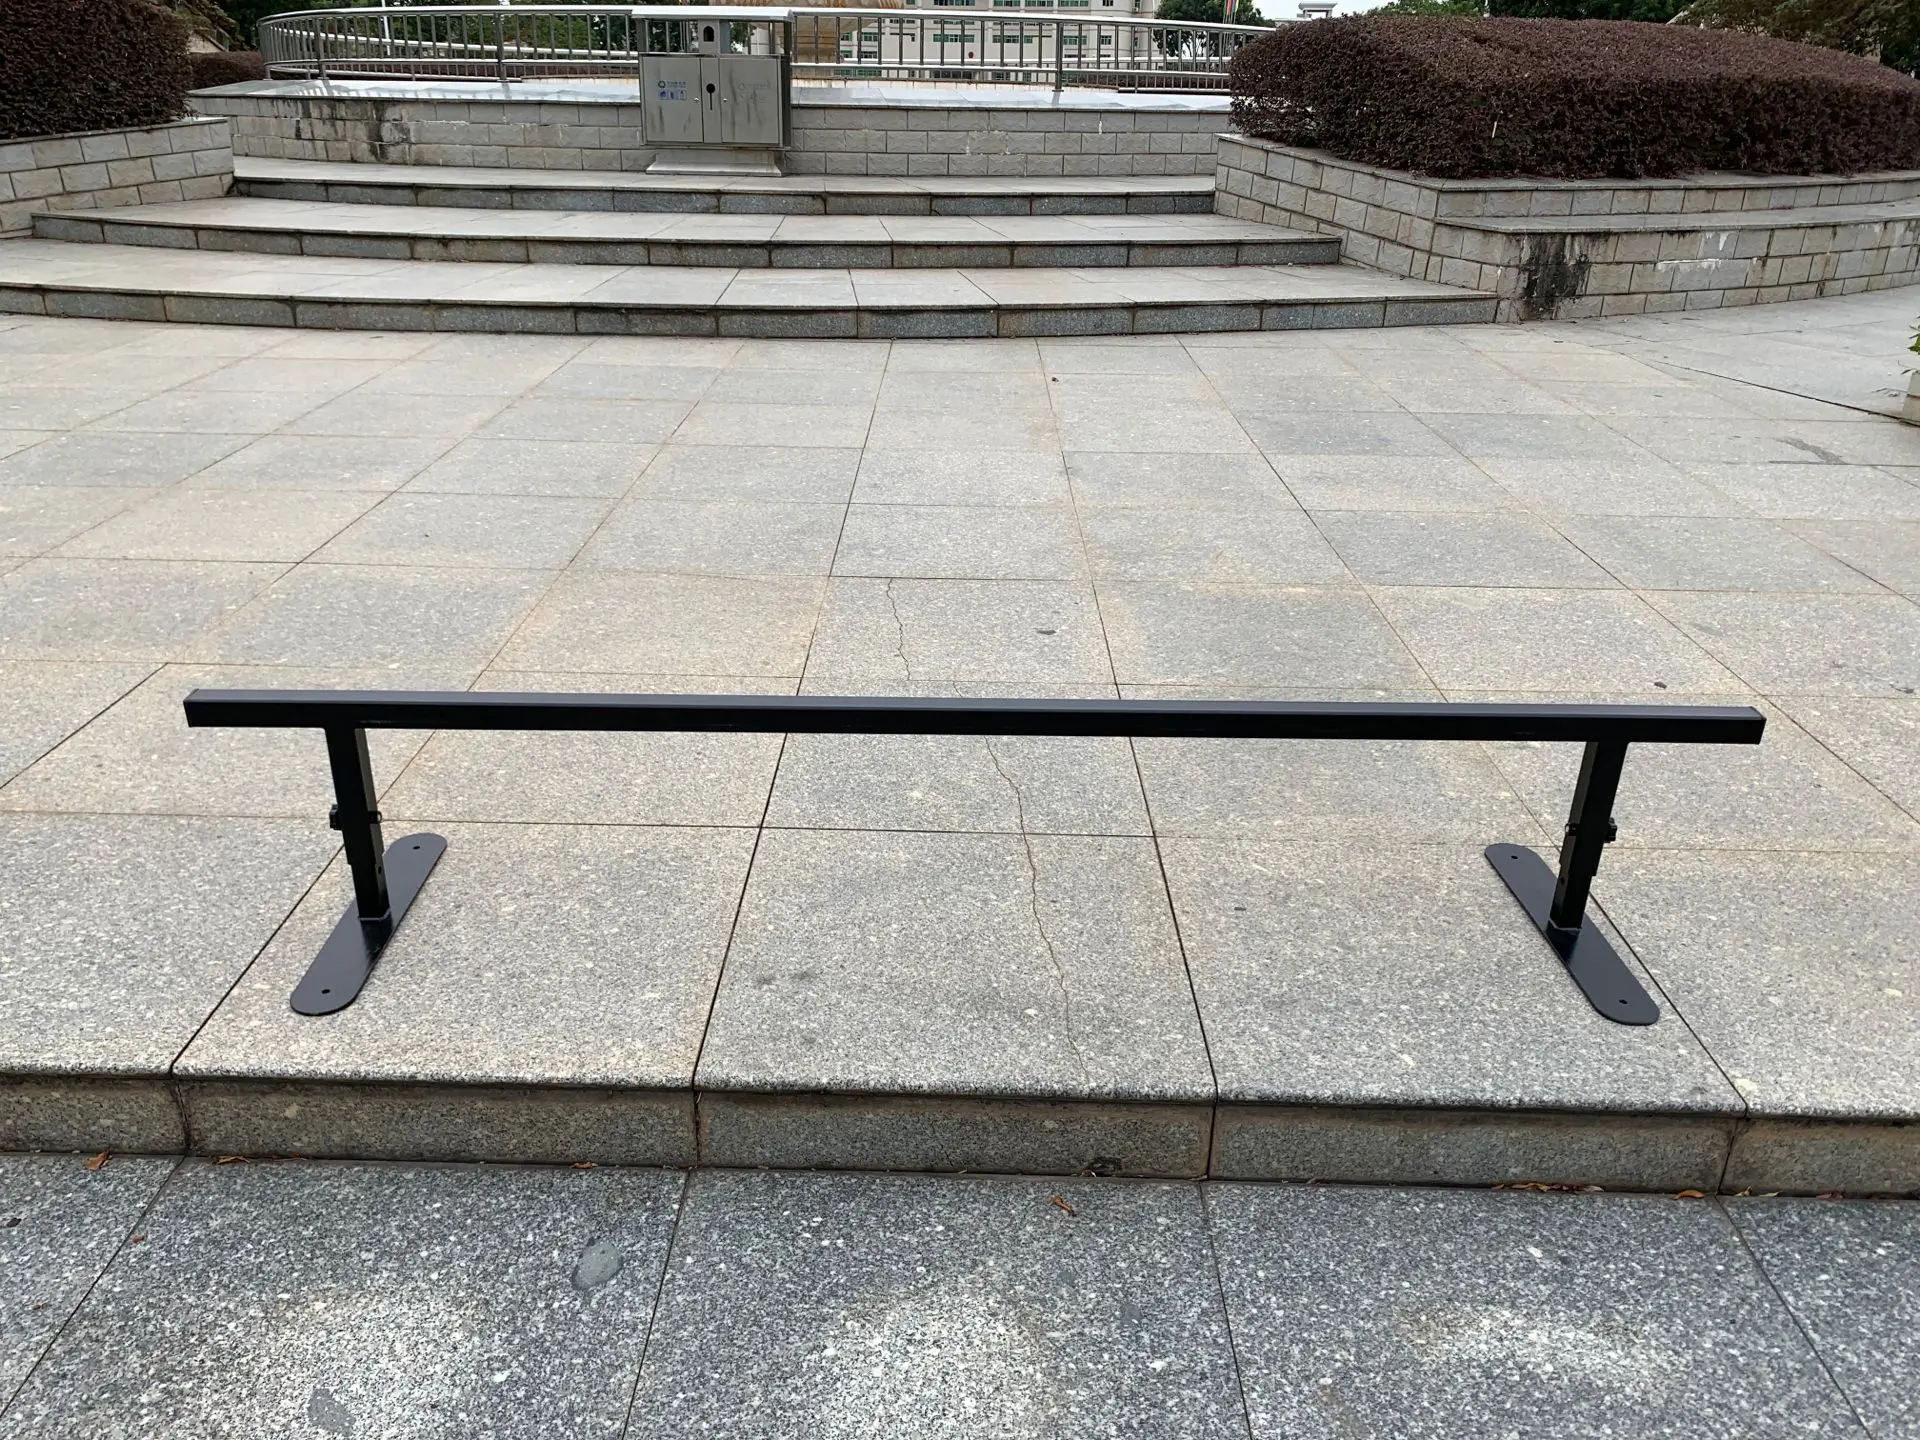 enjoi skateboard rails